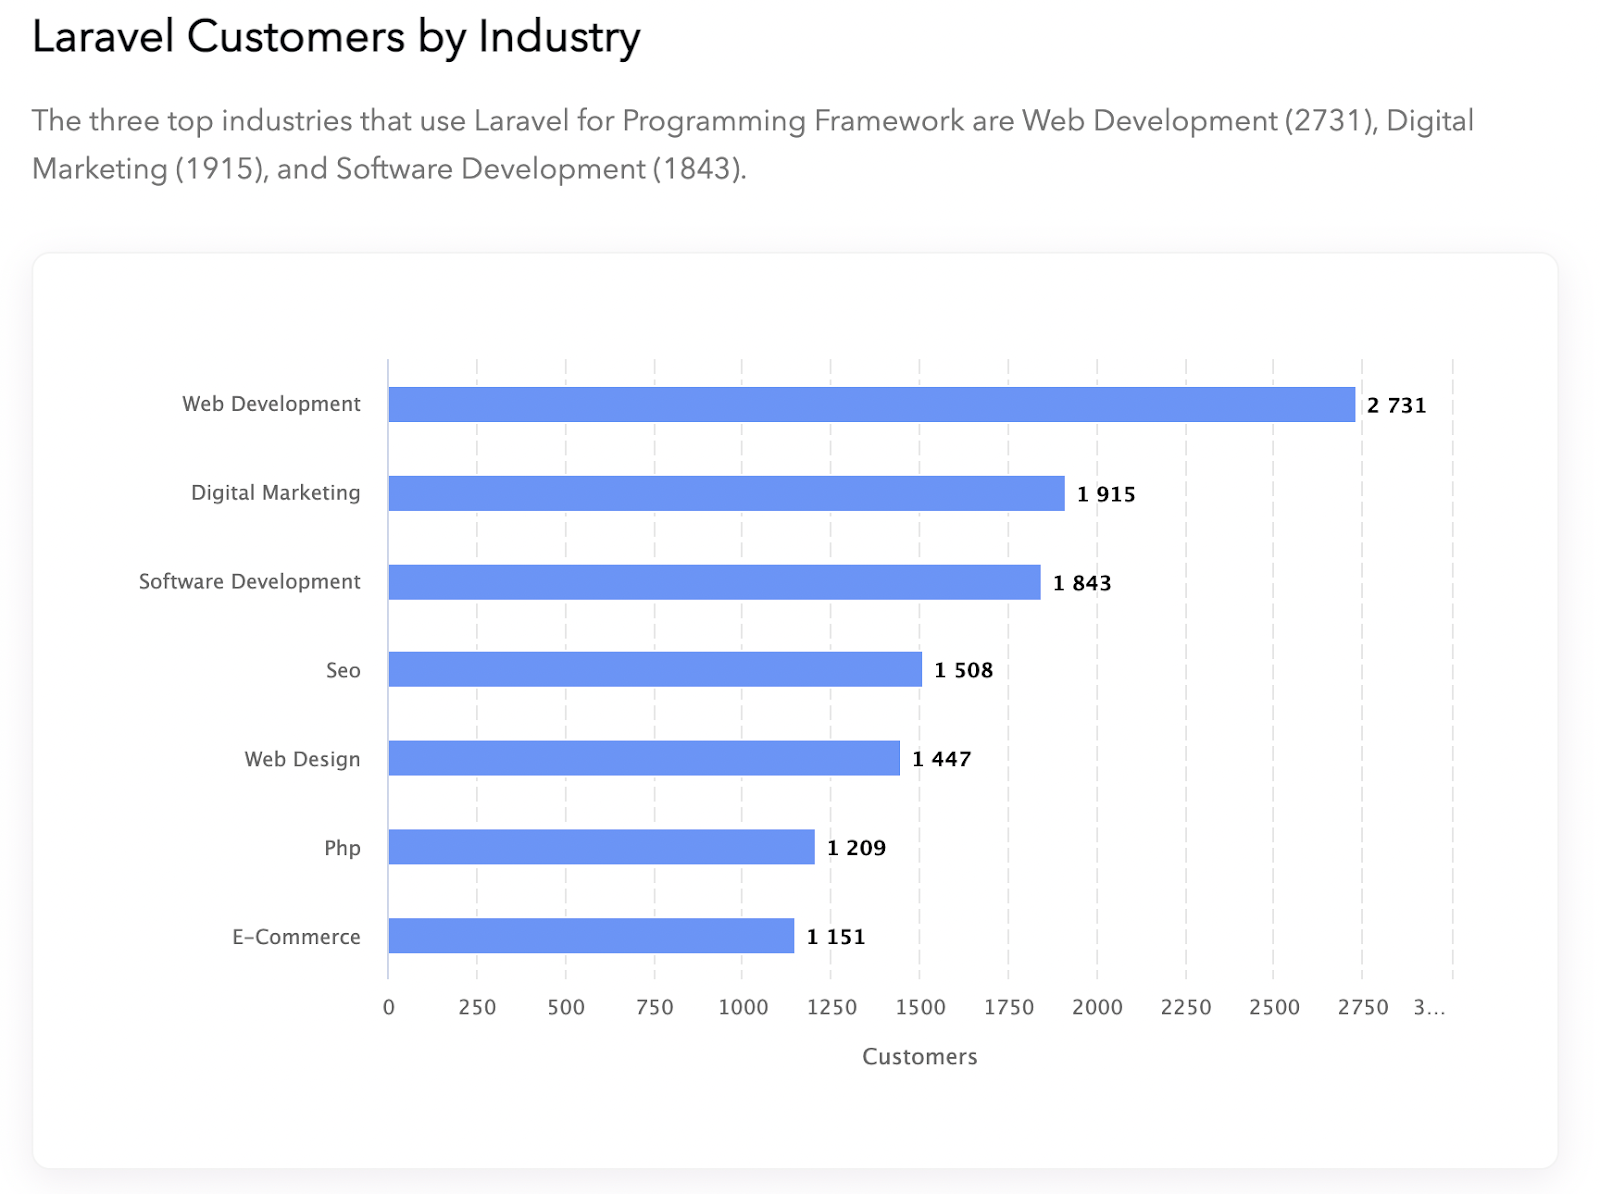 Web development is the top industry